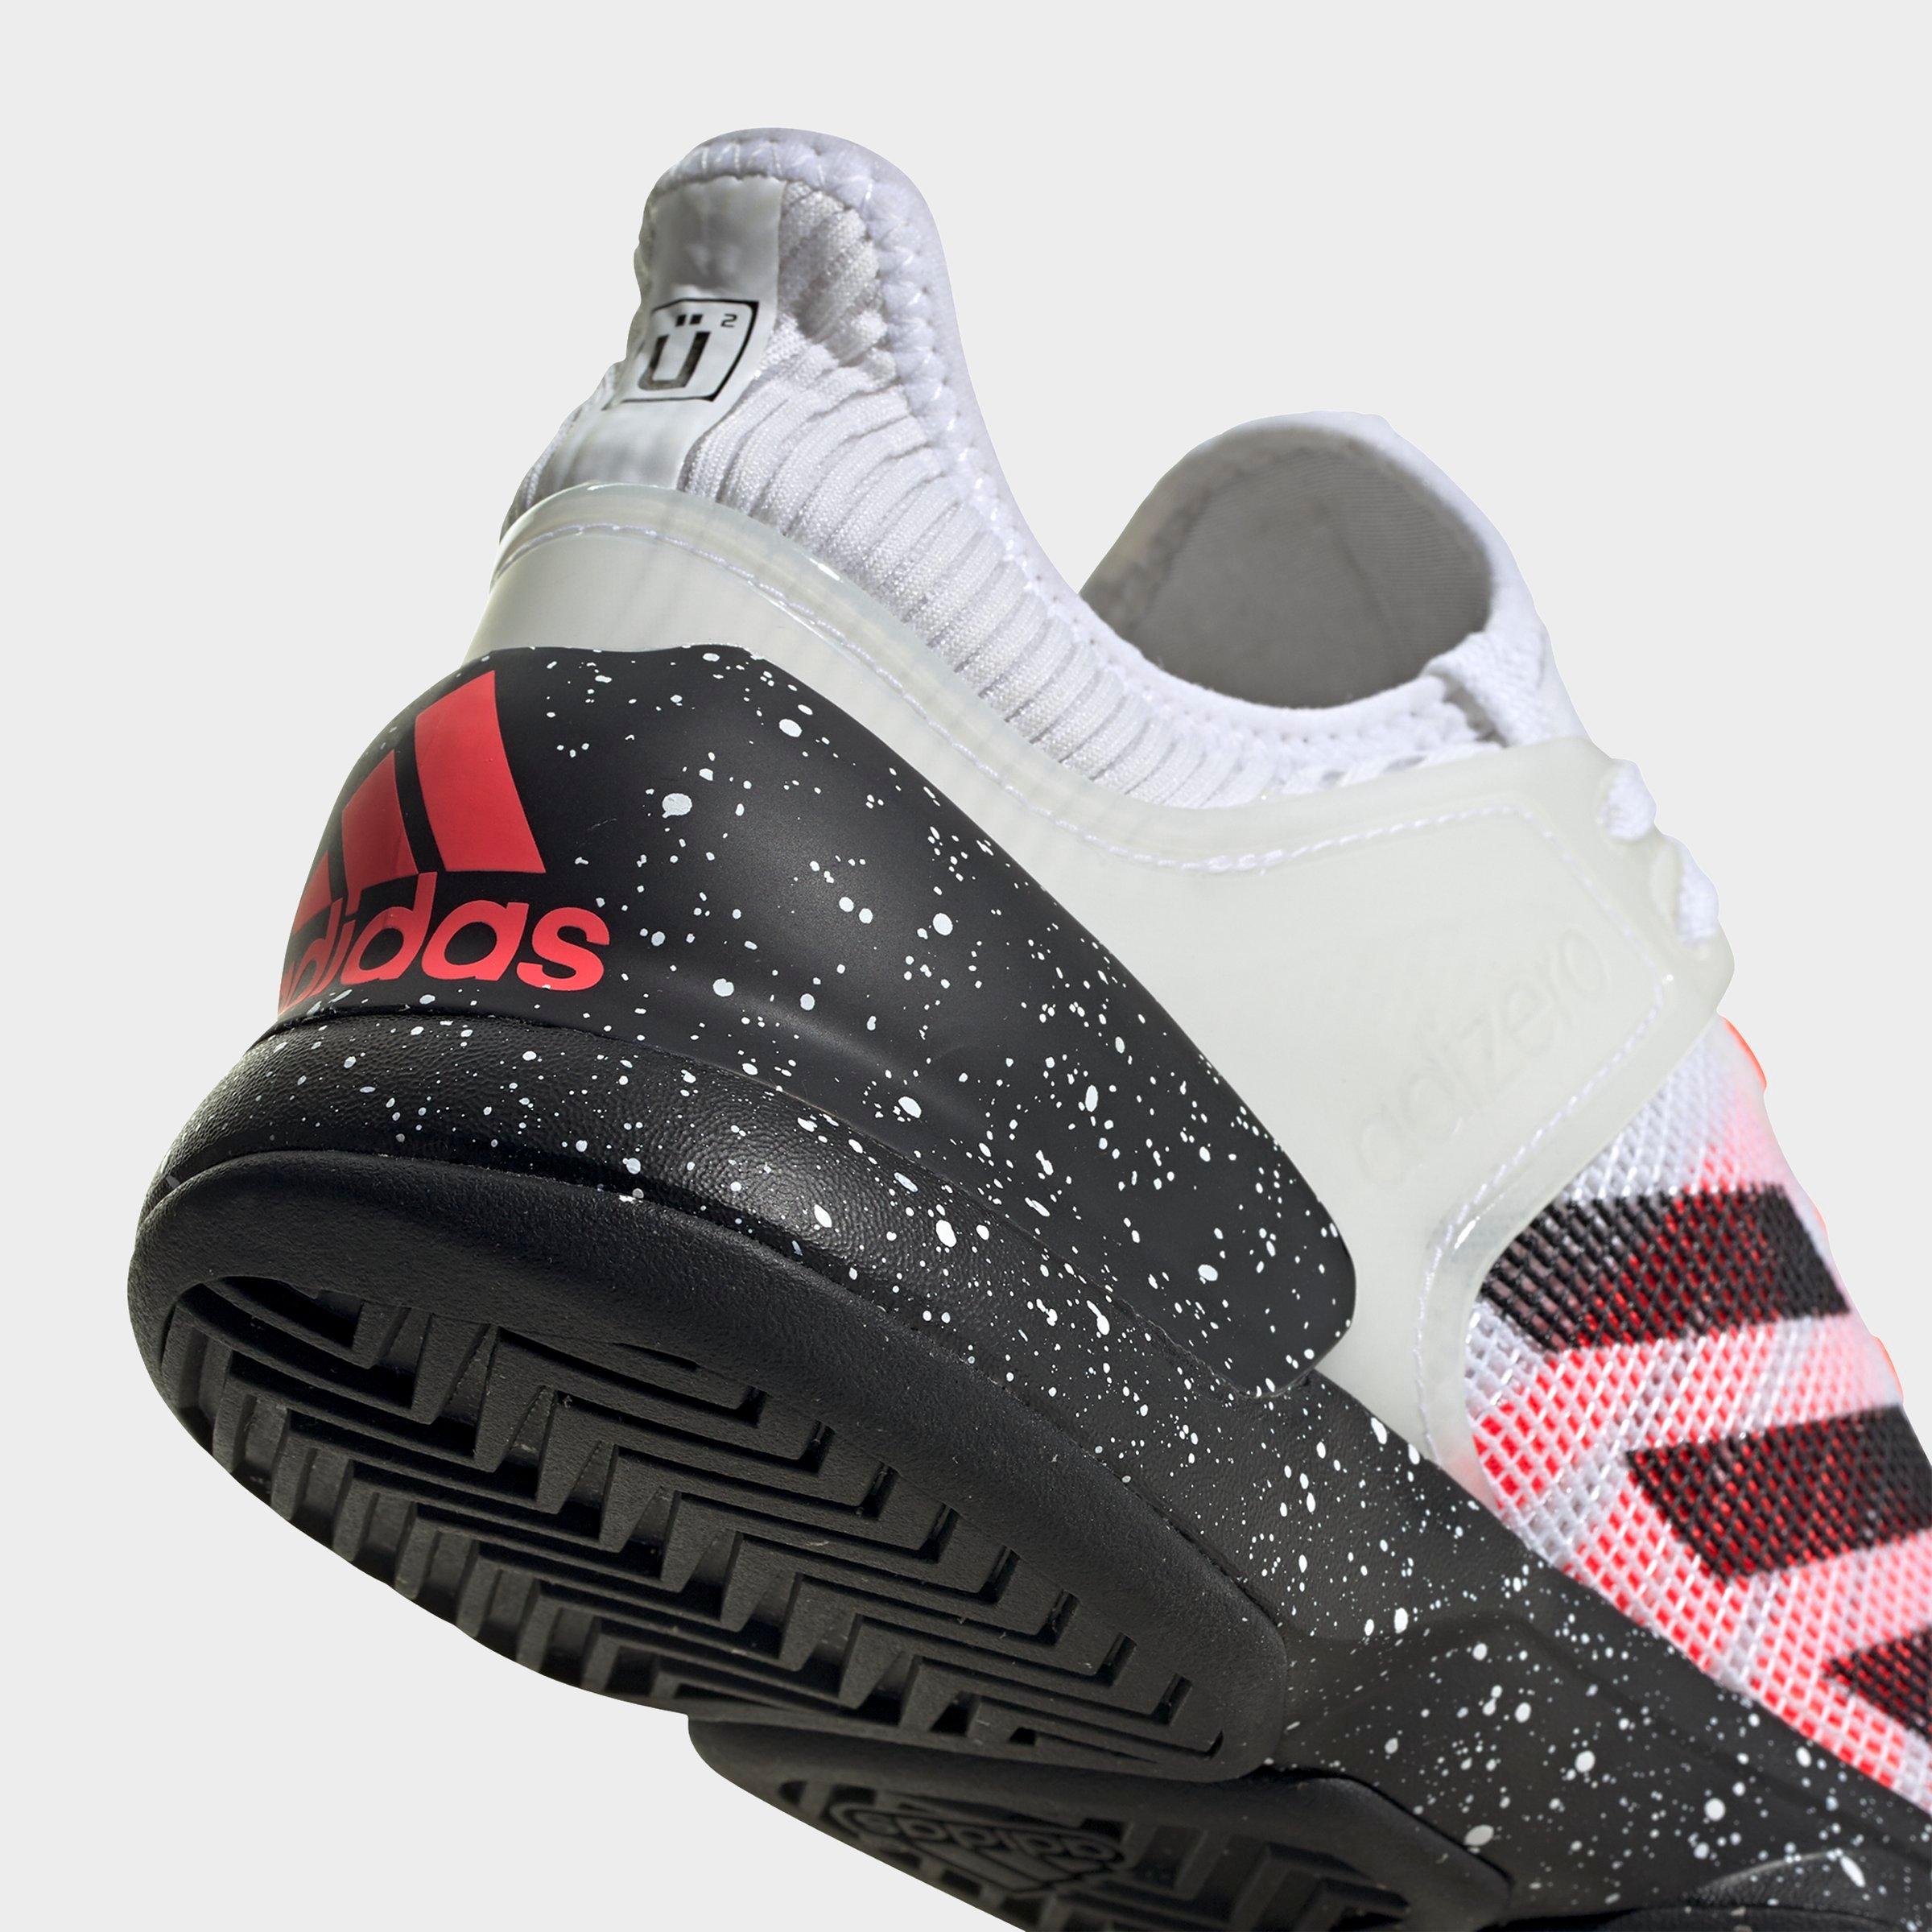 adidas hard court tennis shoes